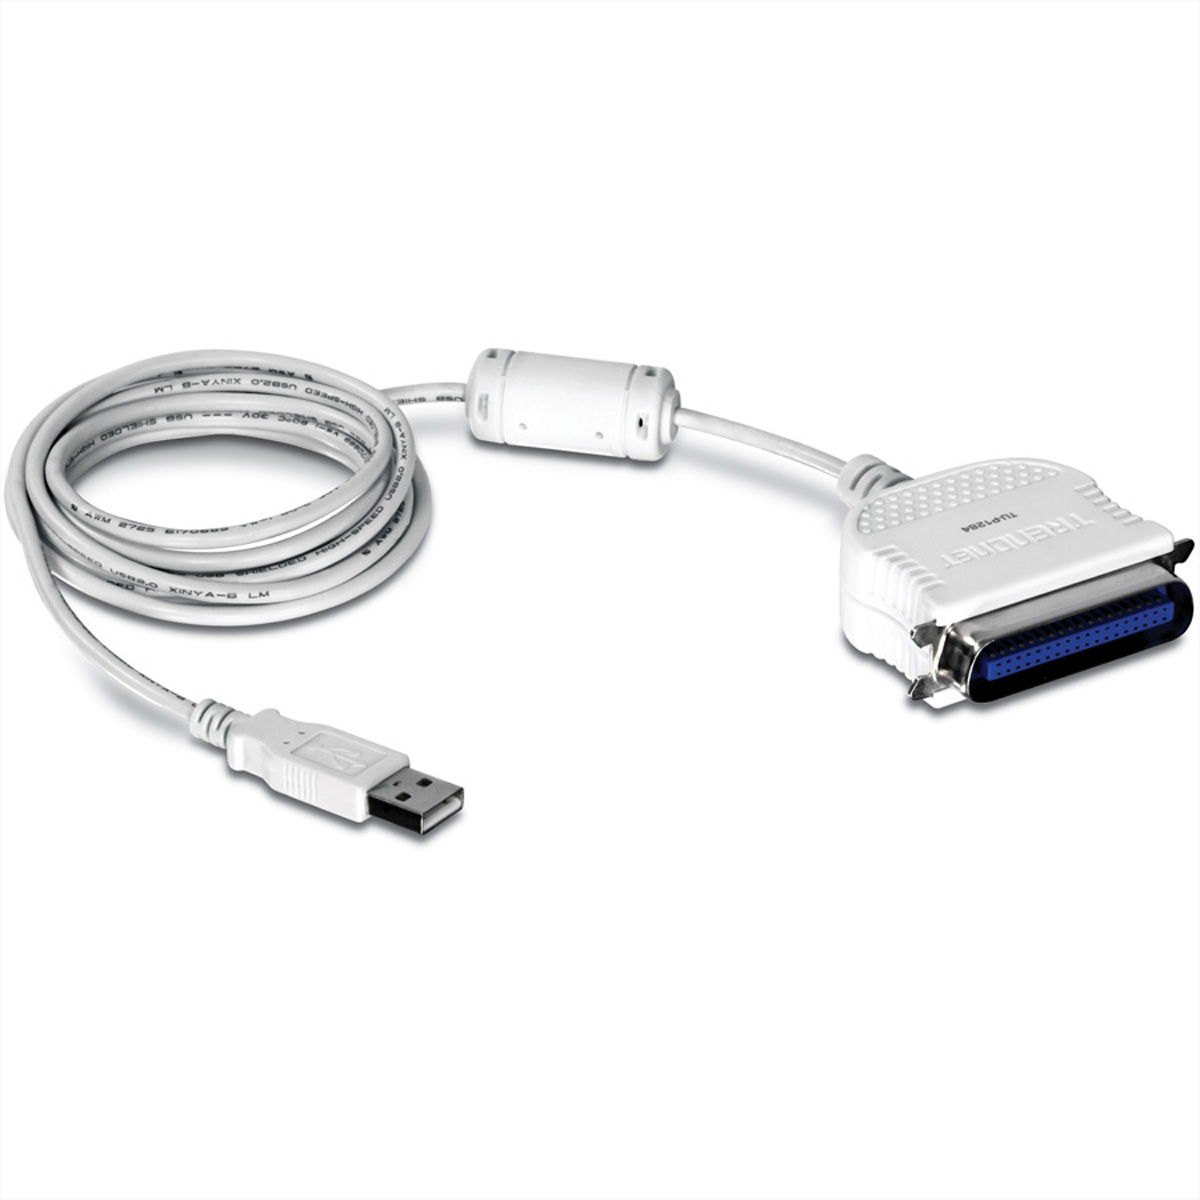 TRENDNET TU-P1284 1284 Konverter Converter USB Parallel USB-Parallel zu